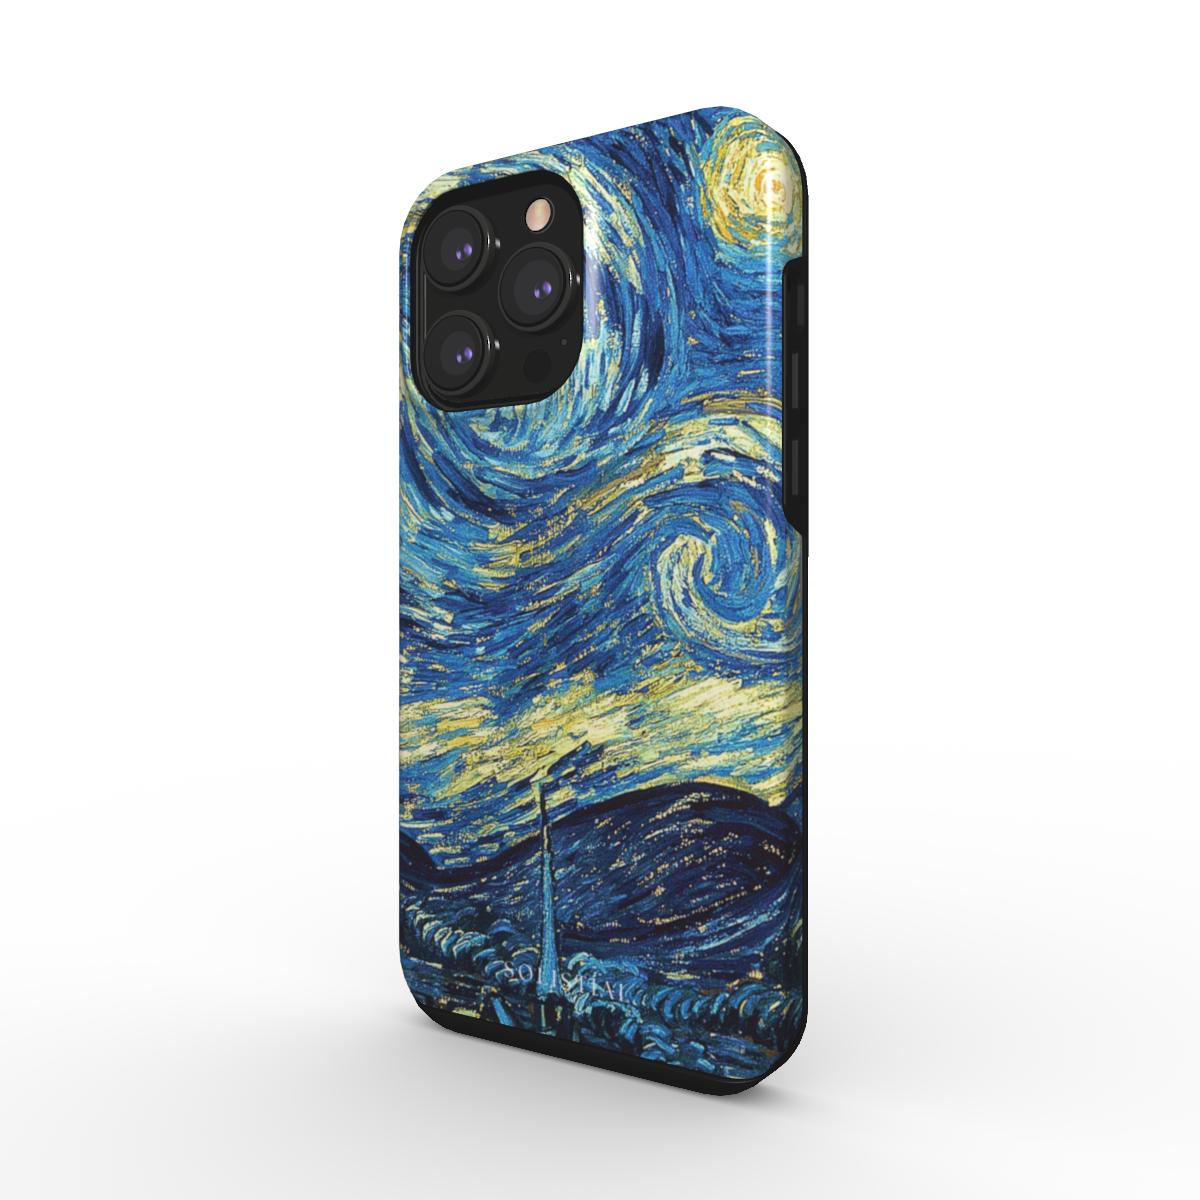 Starry Night Vol.2 by Van Gogh Tough Phone Case